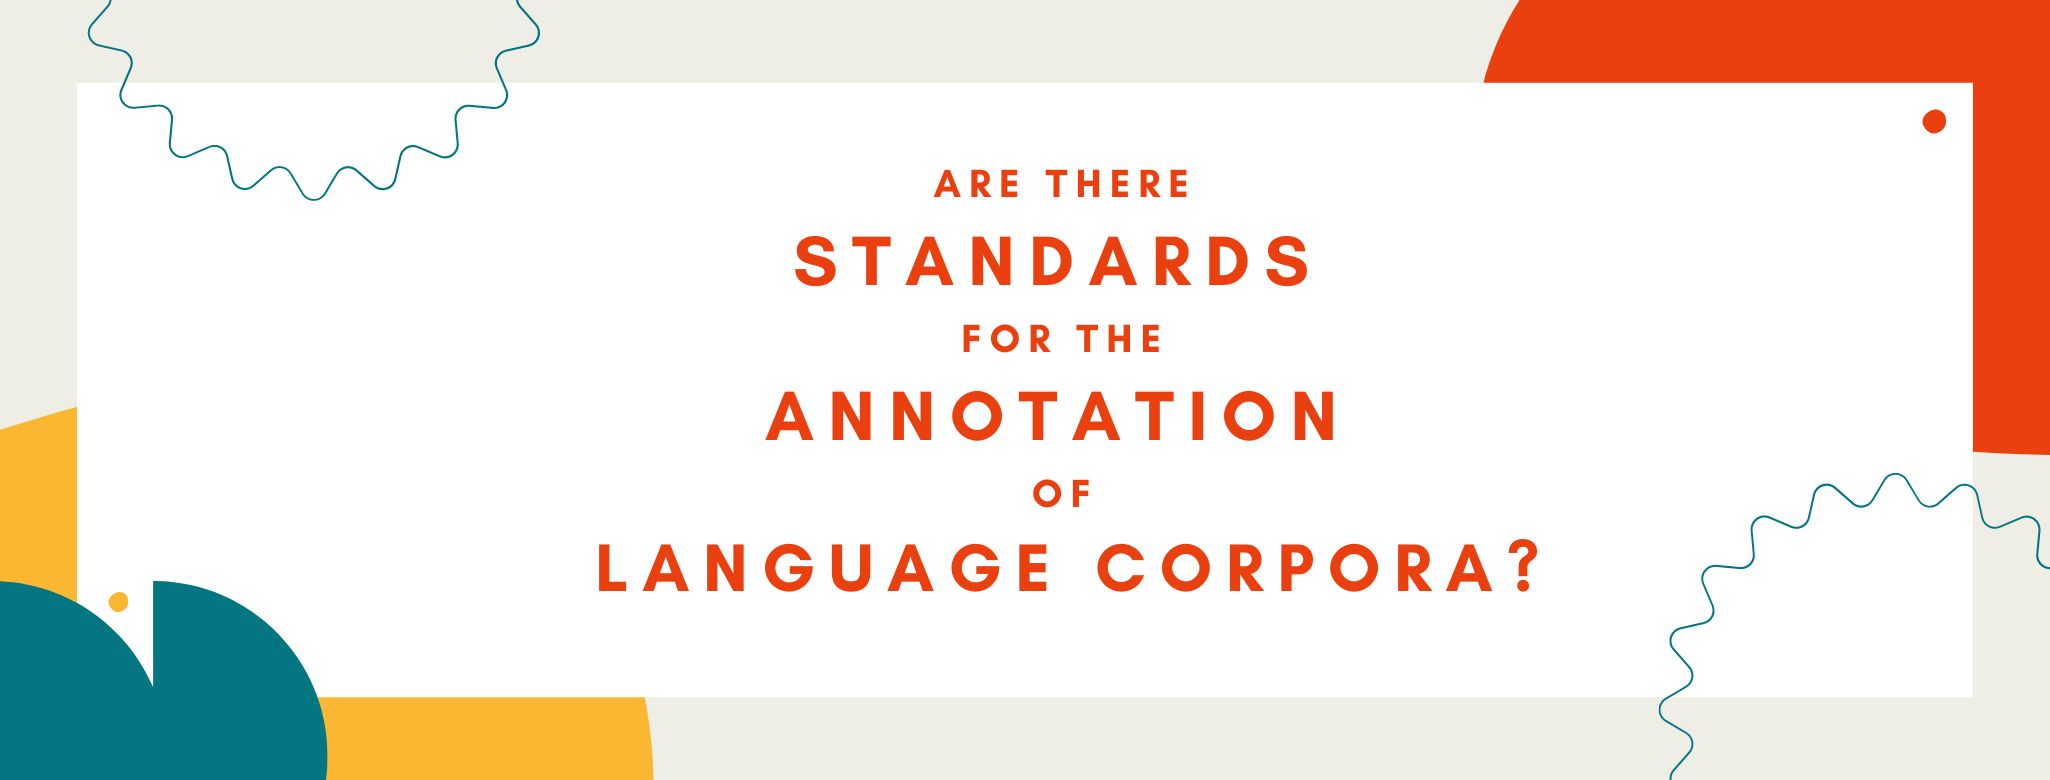 language_corpora_annotation